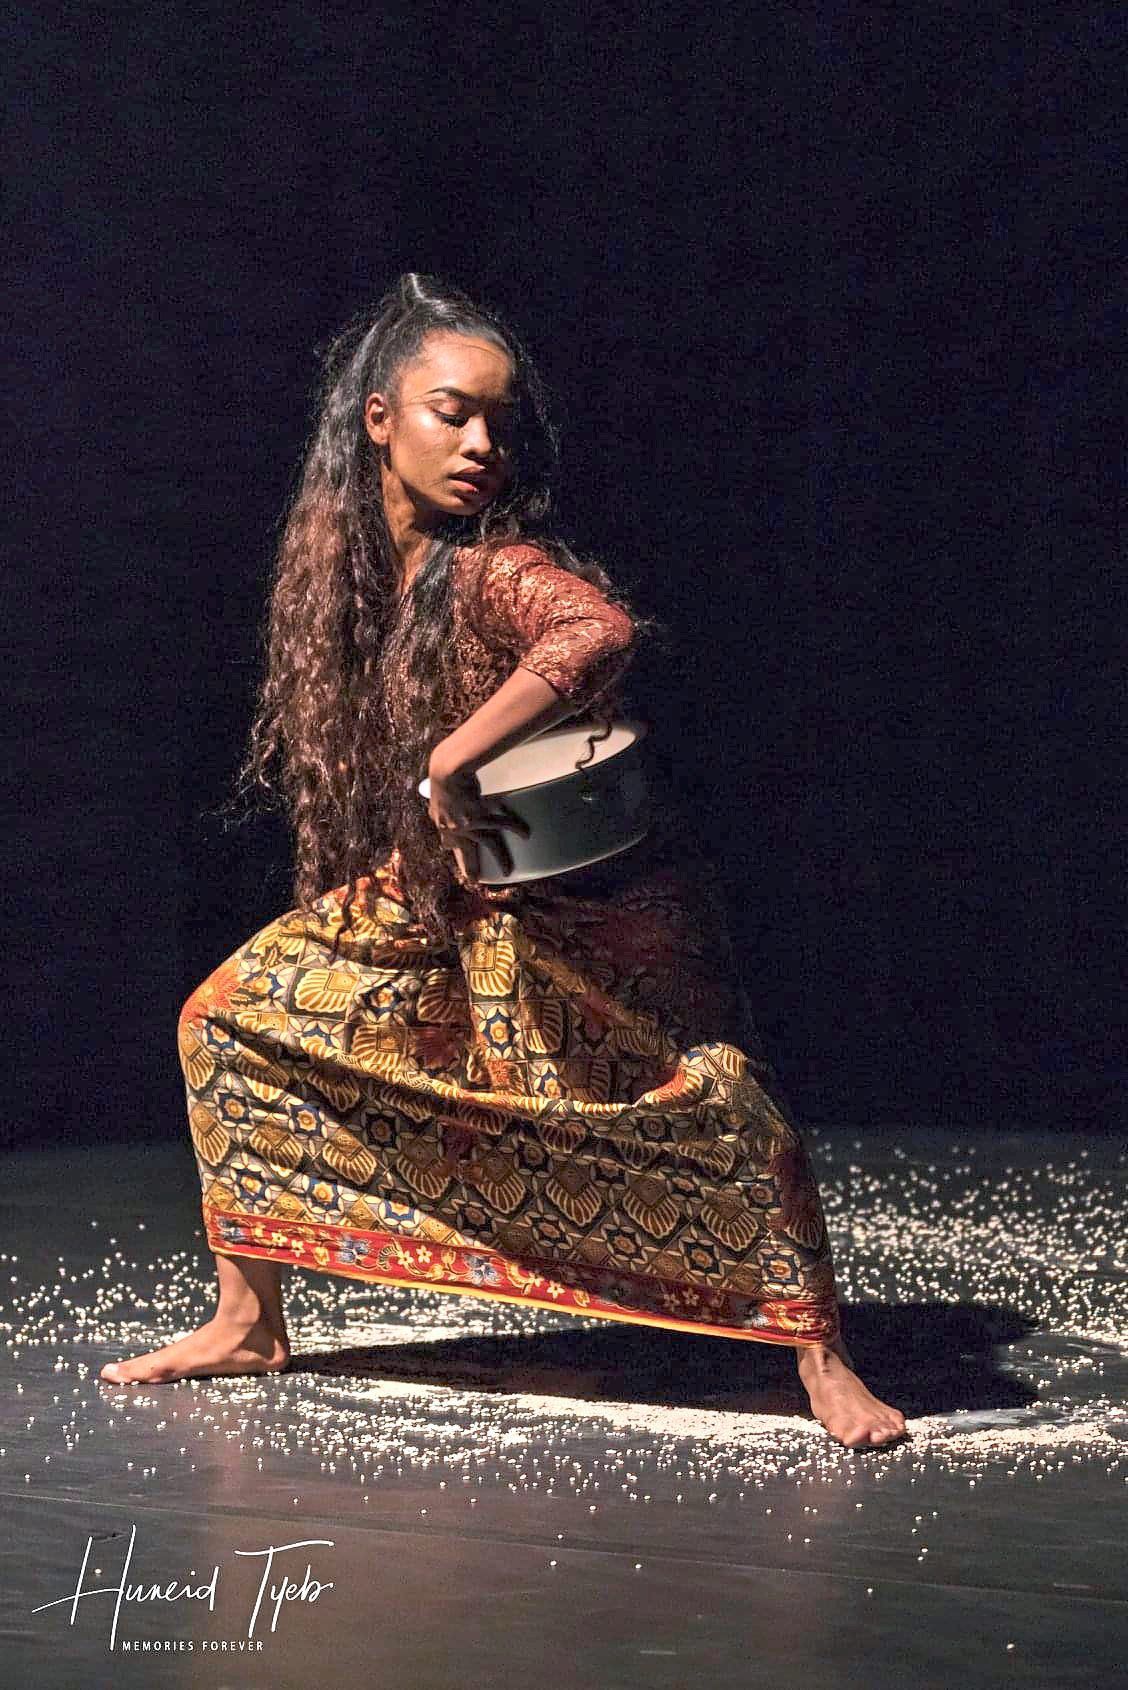 New dance series 'Tabula Rasa' set to showcase cutting-edge choreography